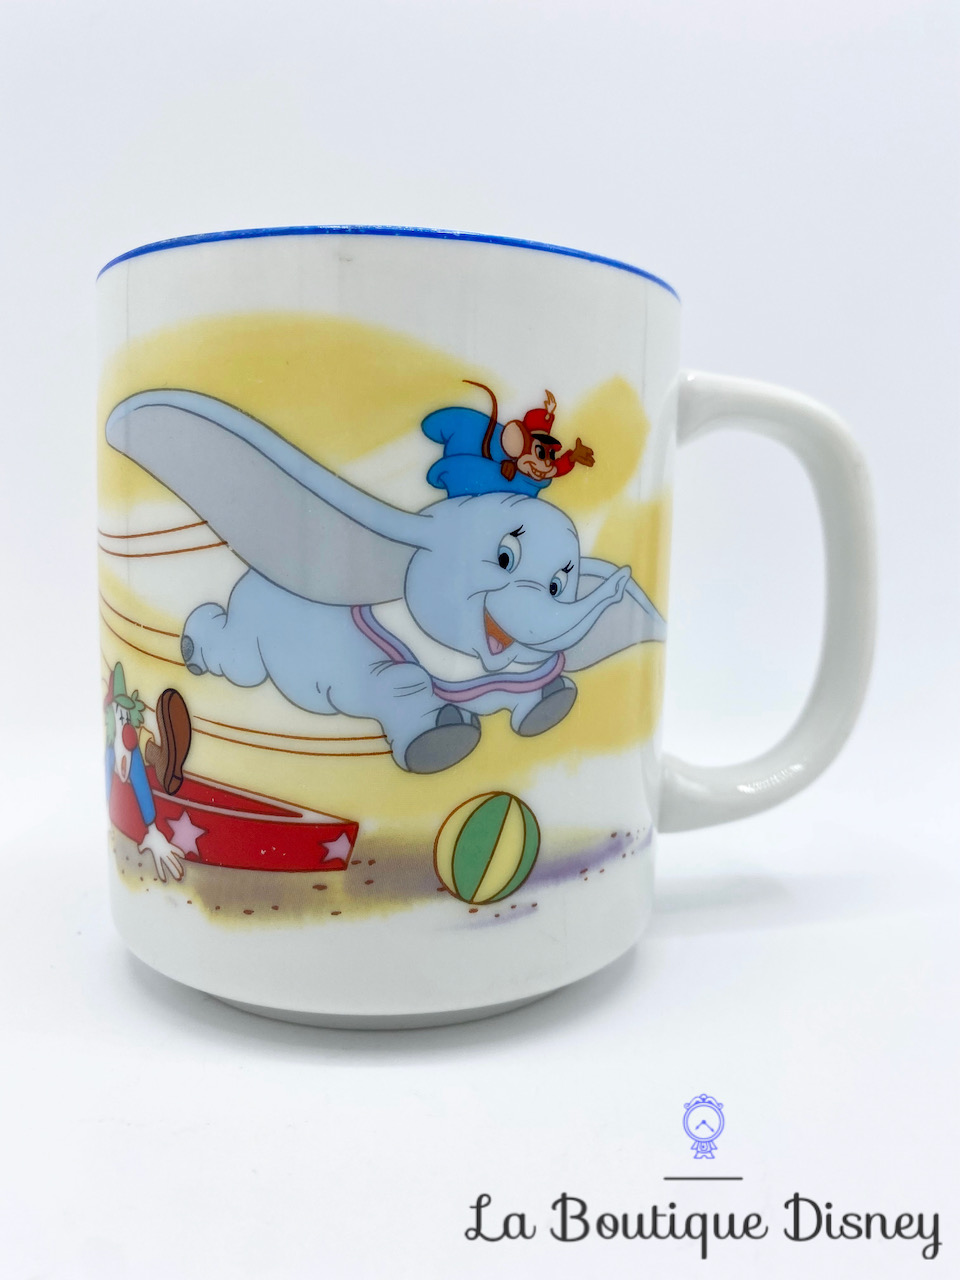 tasse-dumbo-walt-disney-company-mug-japan-vintage-blanc-dessin-3